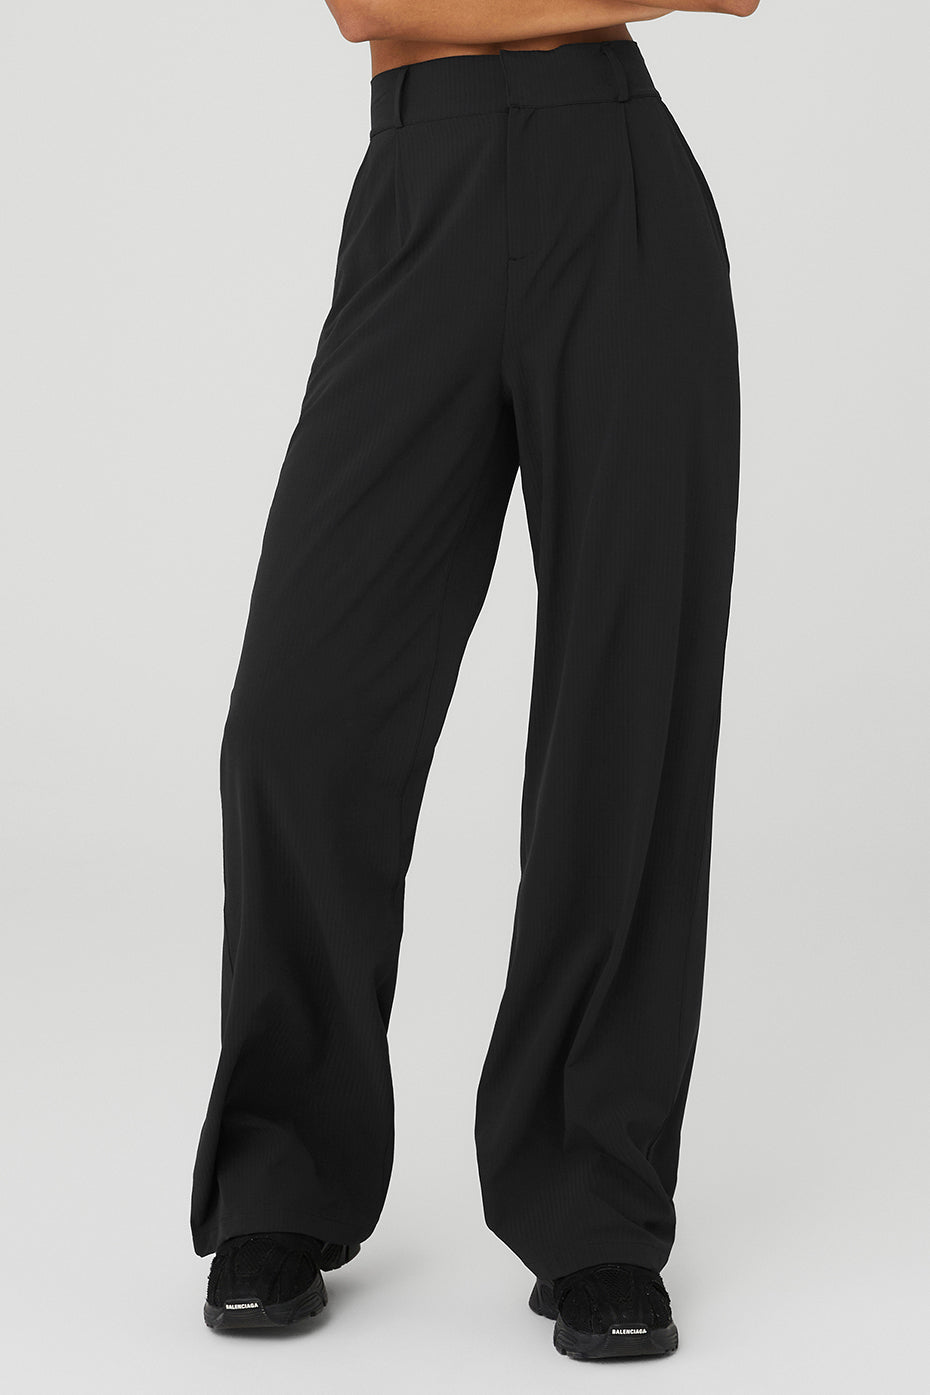 Alo Yoga Accolade Straight Leg Sweatpant worn by Tracy Tutor as seen in  Million Dollar Listing Los Angeles (S14E01)